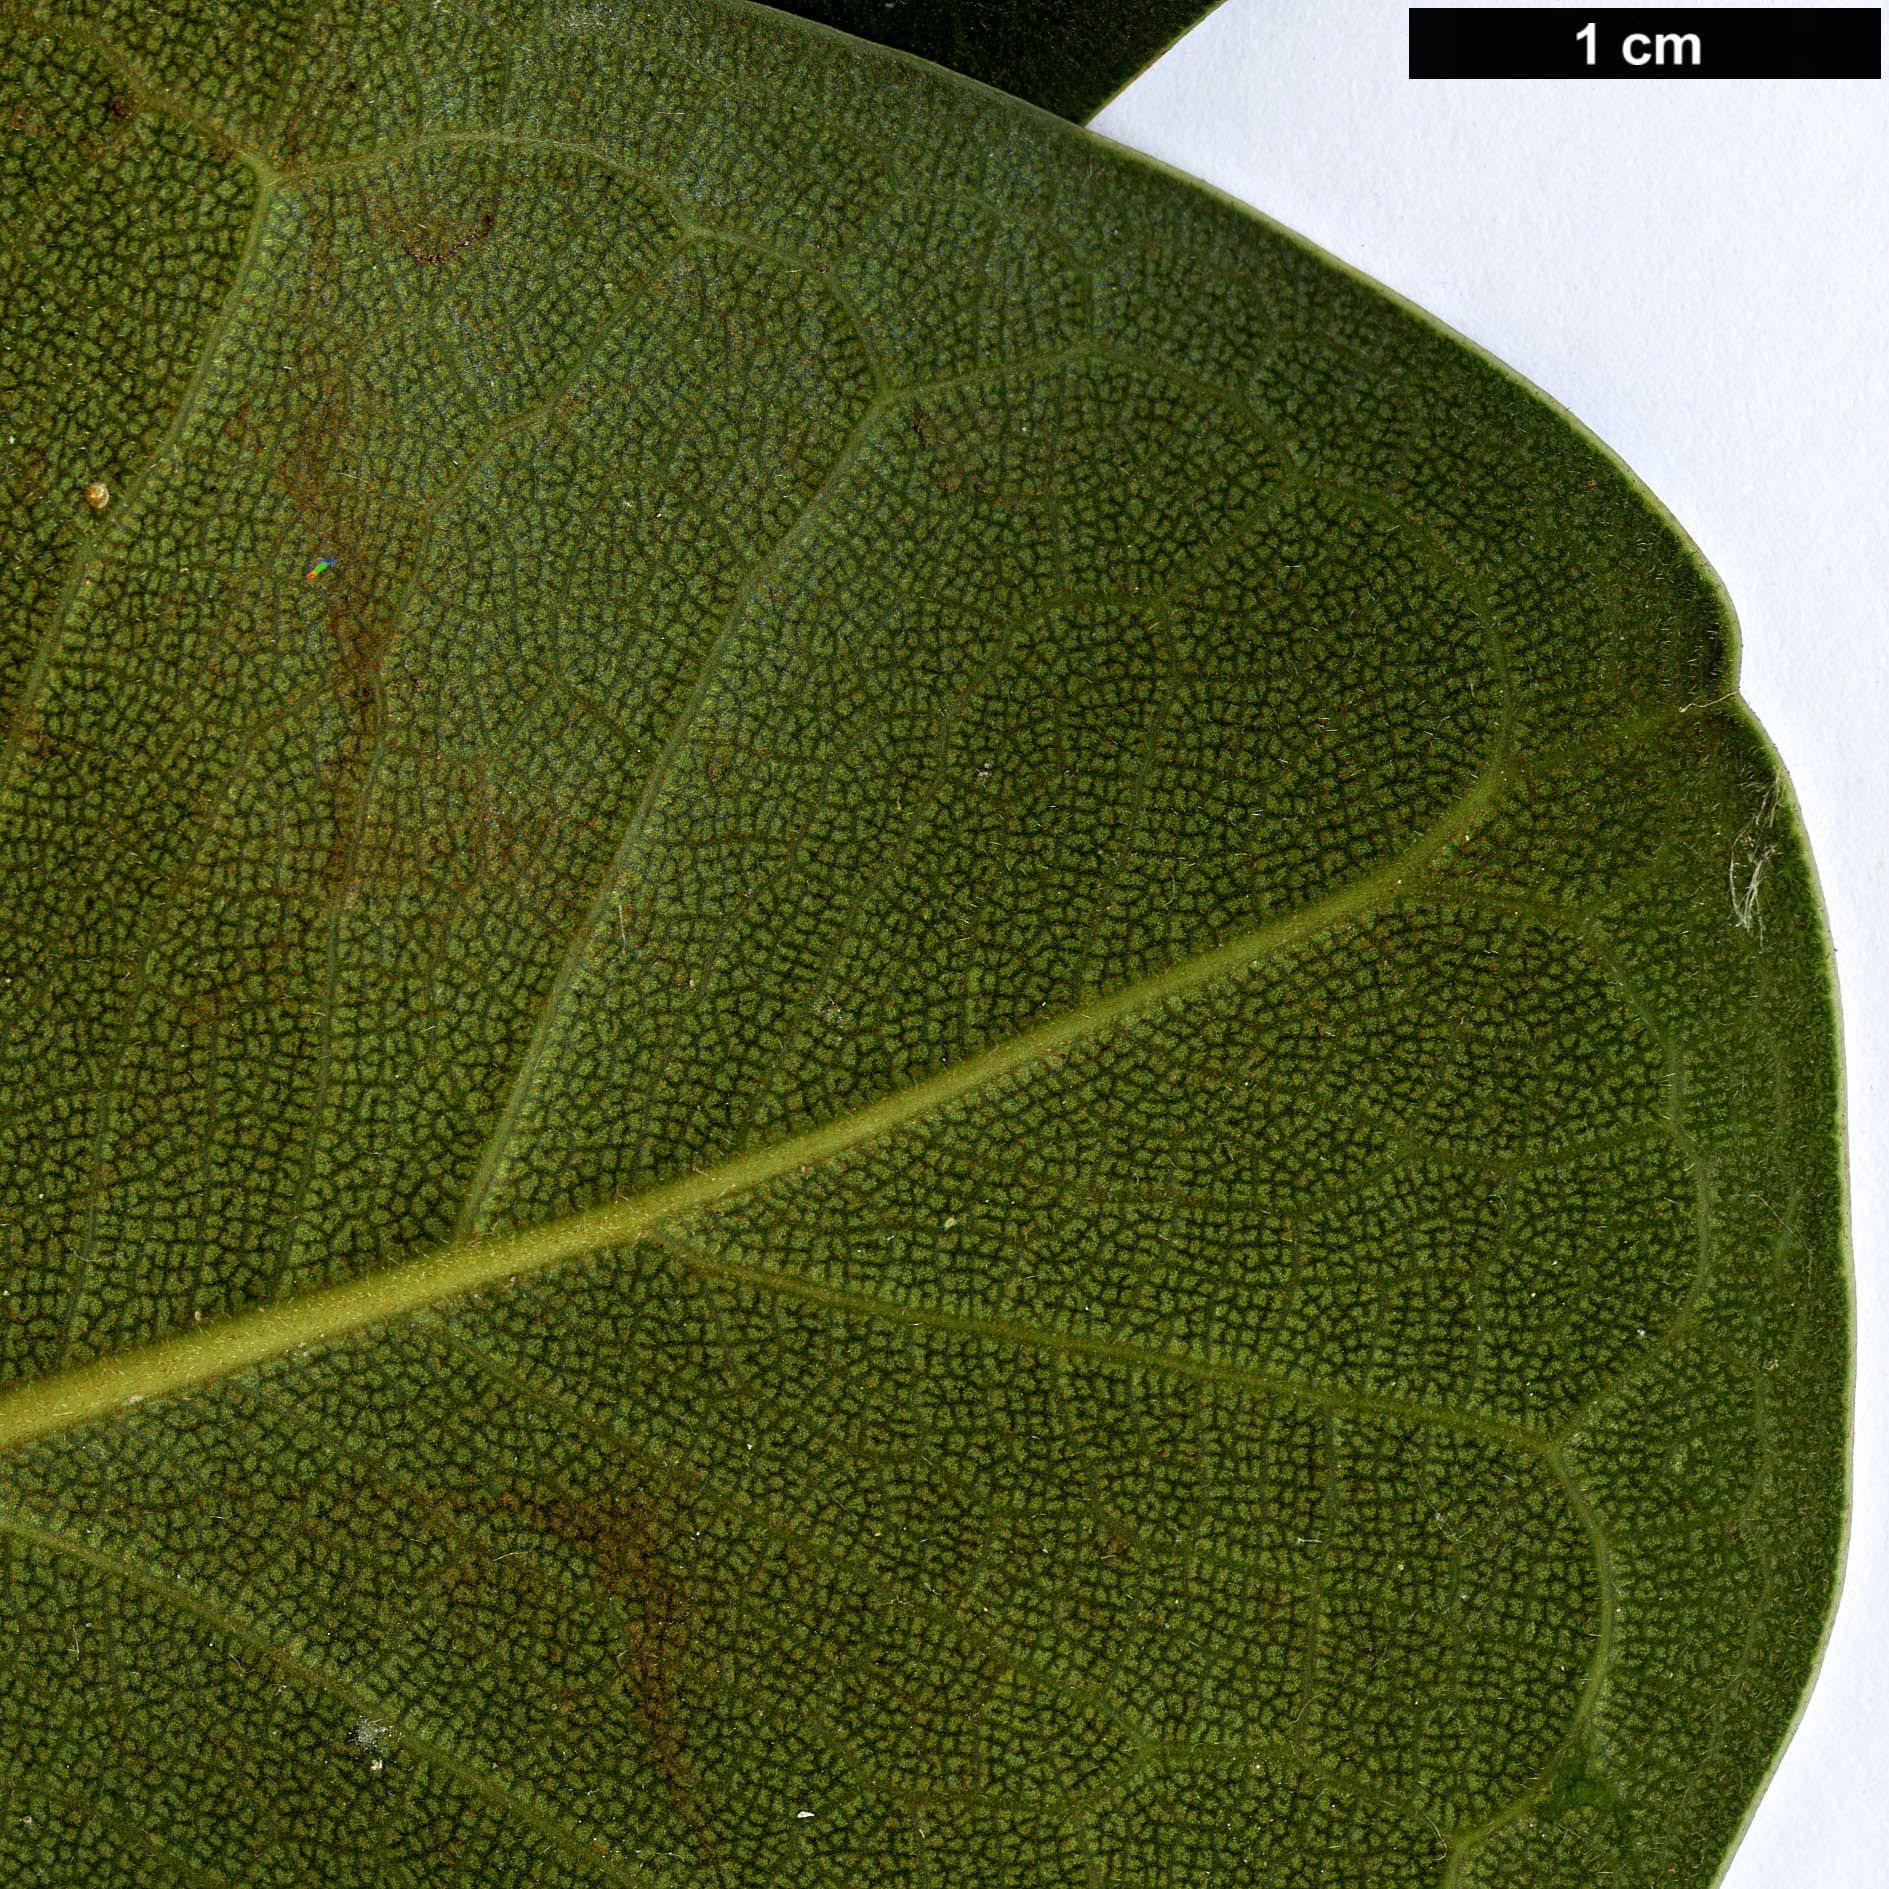 High resolution image: Family: Moraceae - Genus: Ficus - Taxon: rubiginosa